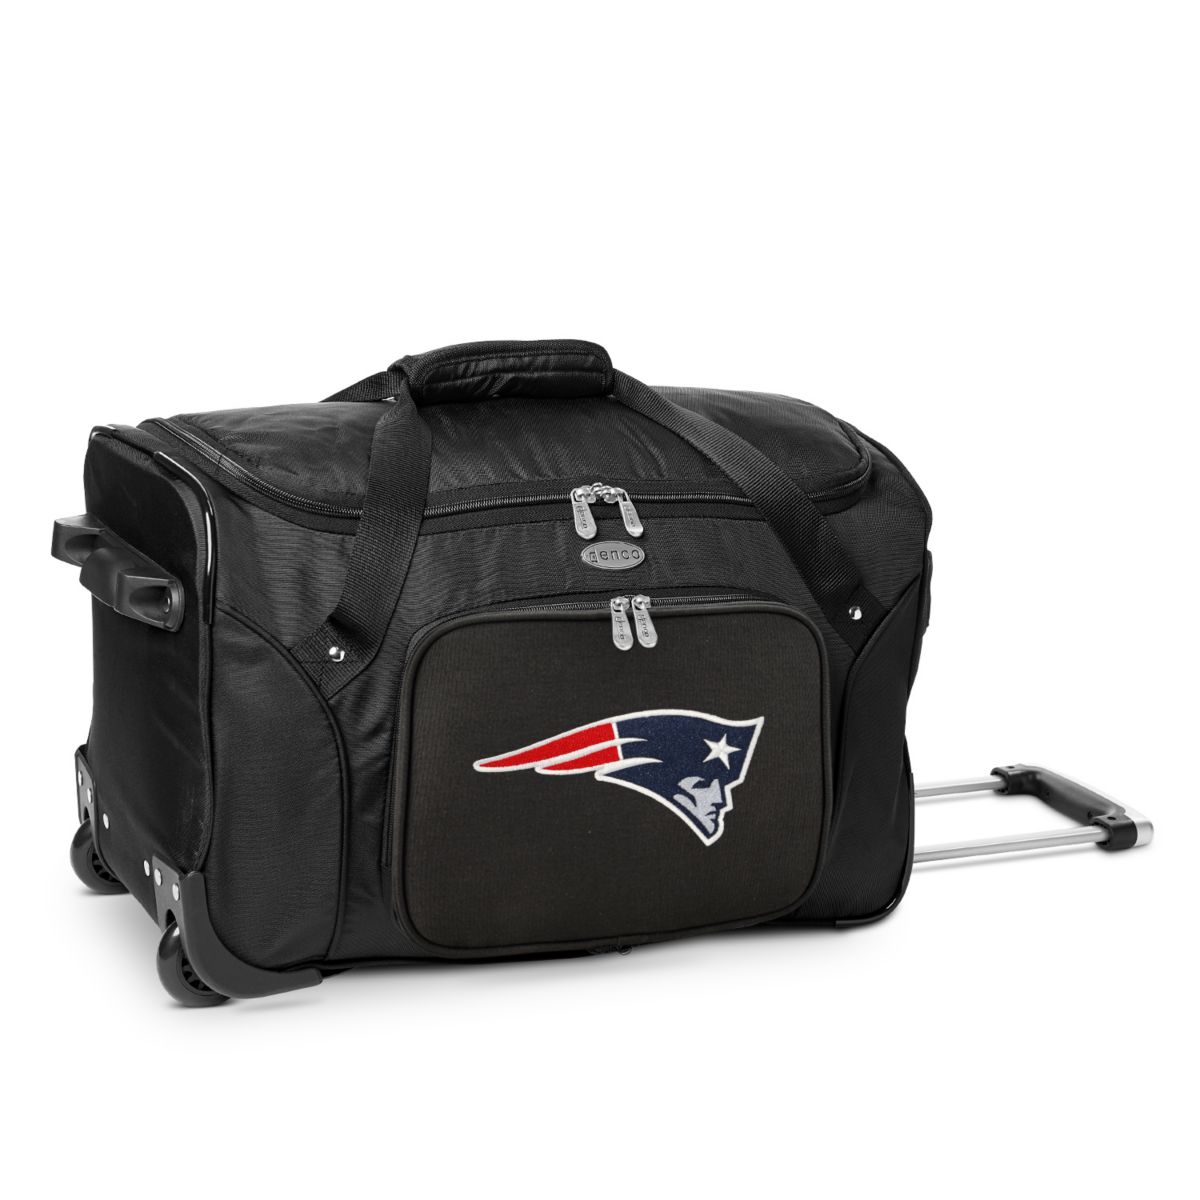 Спортивная сумка Denco New England Patriots на колесиках диаметром 22 дюйма Denco